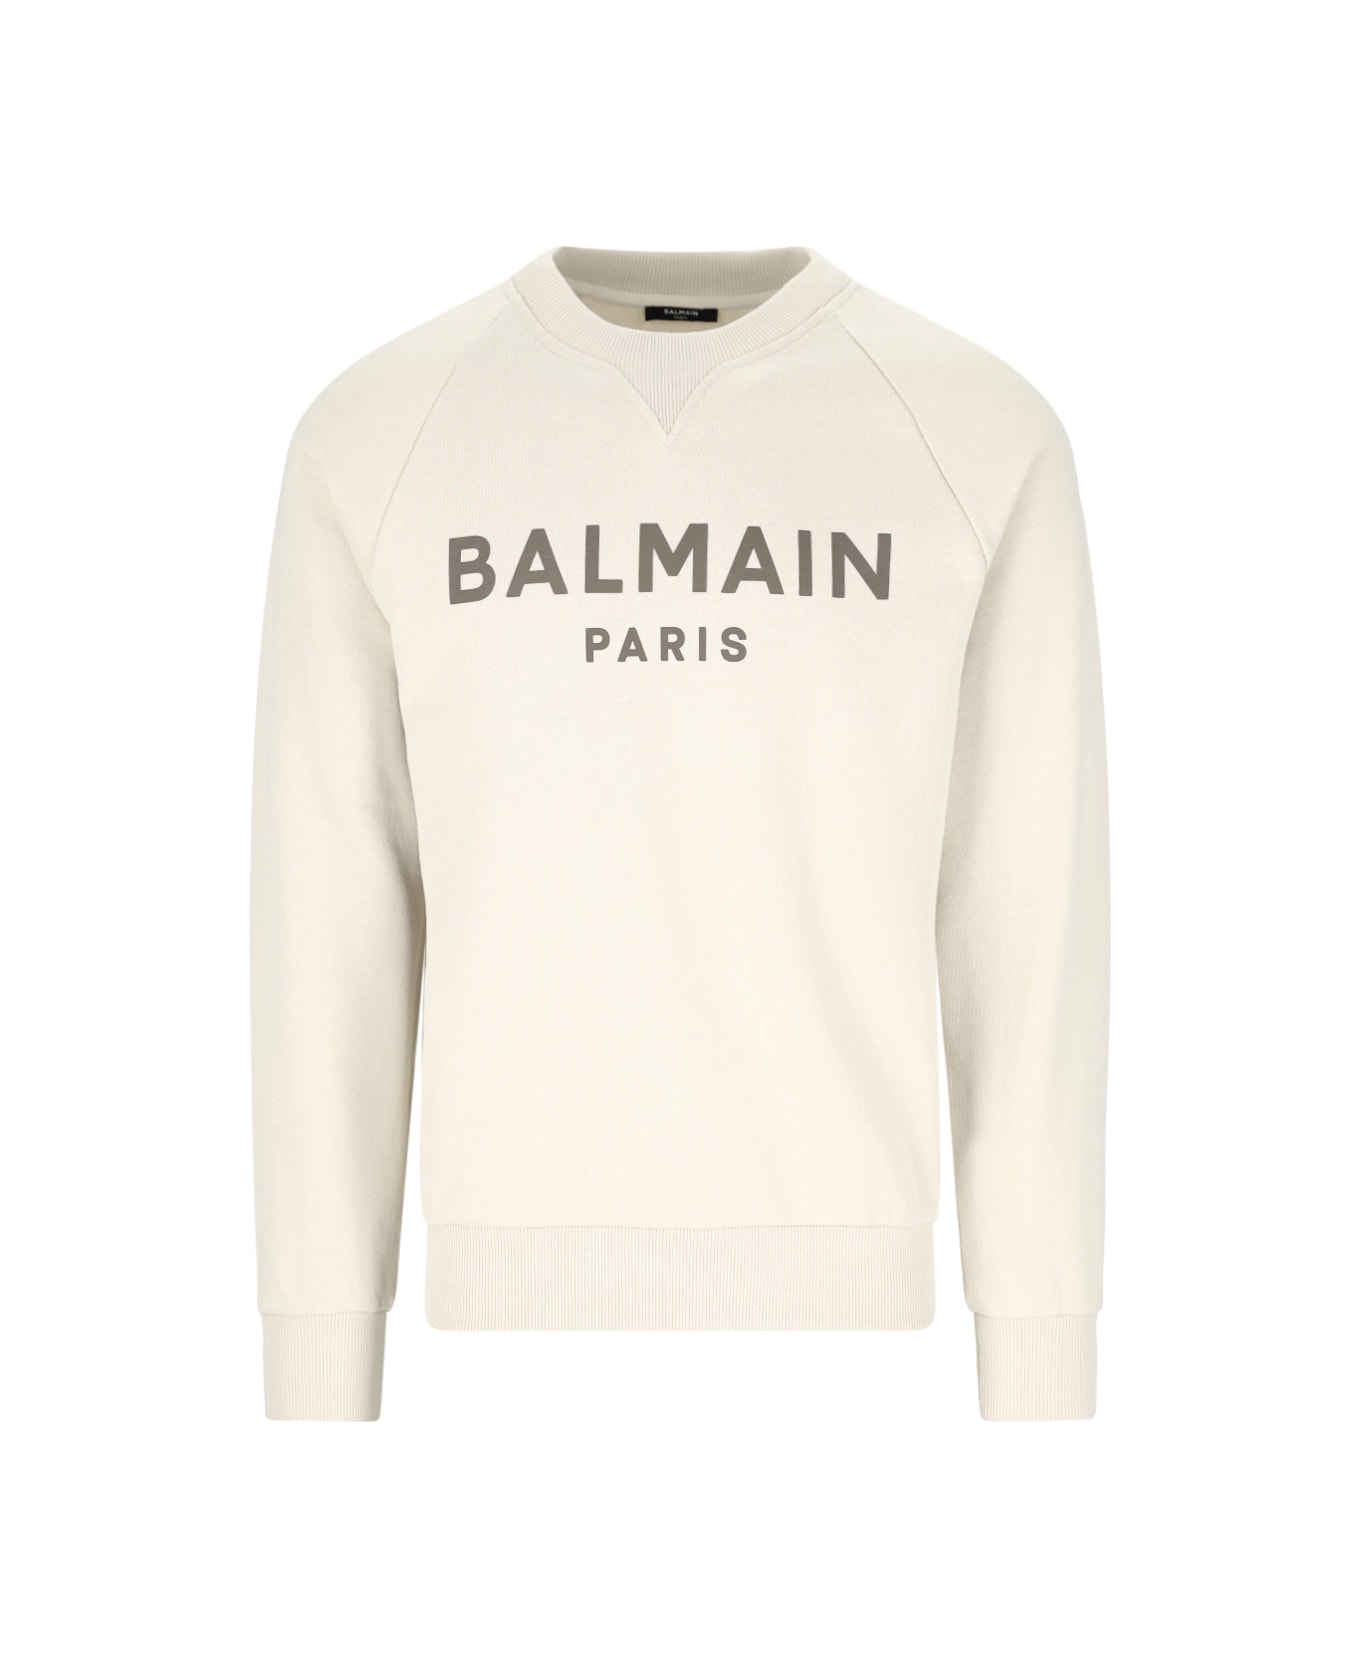 Balmain Logo Printed Crewneck Sweatshirt - White